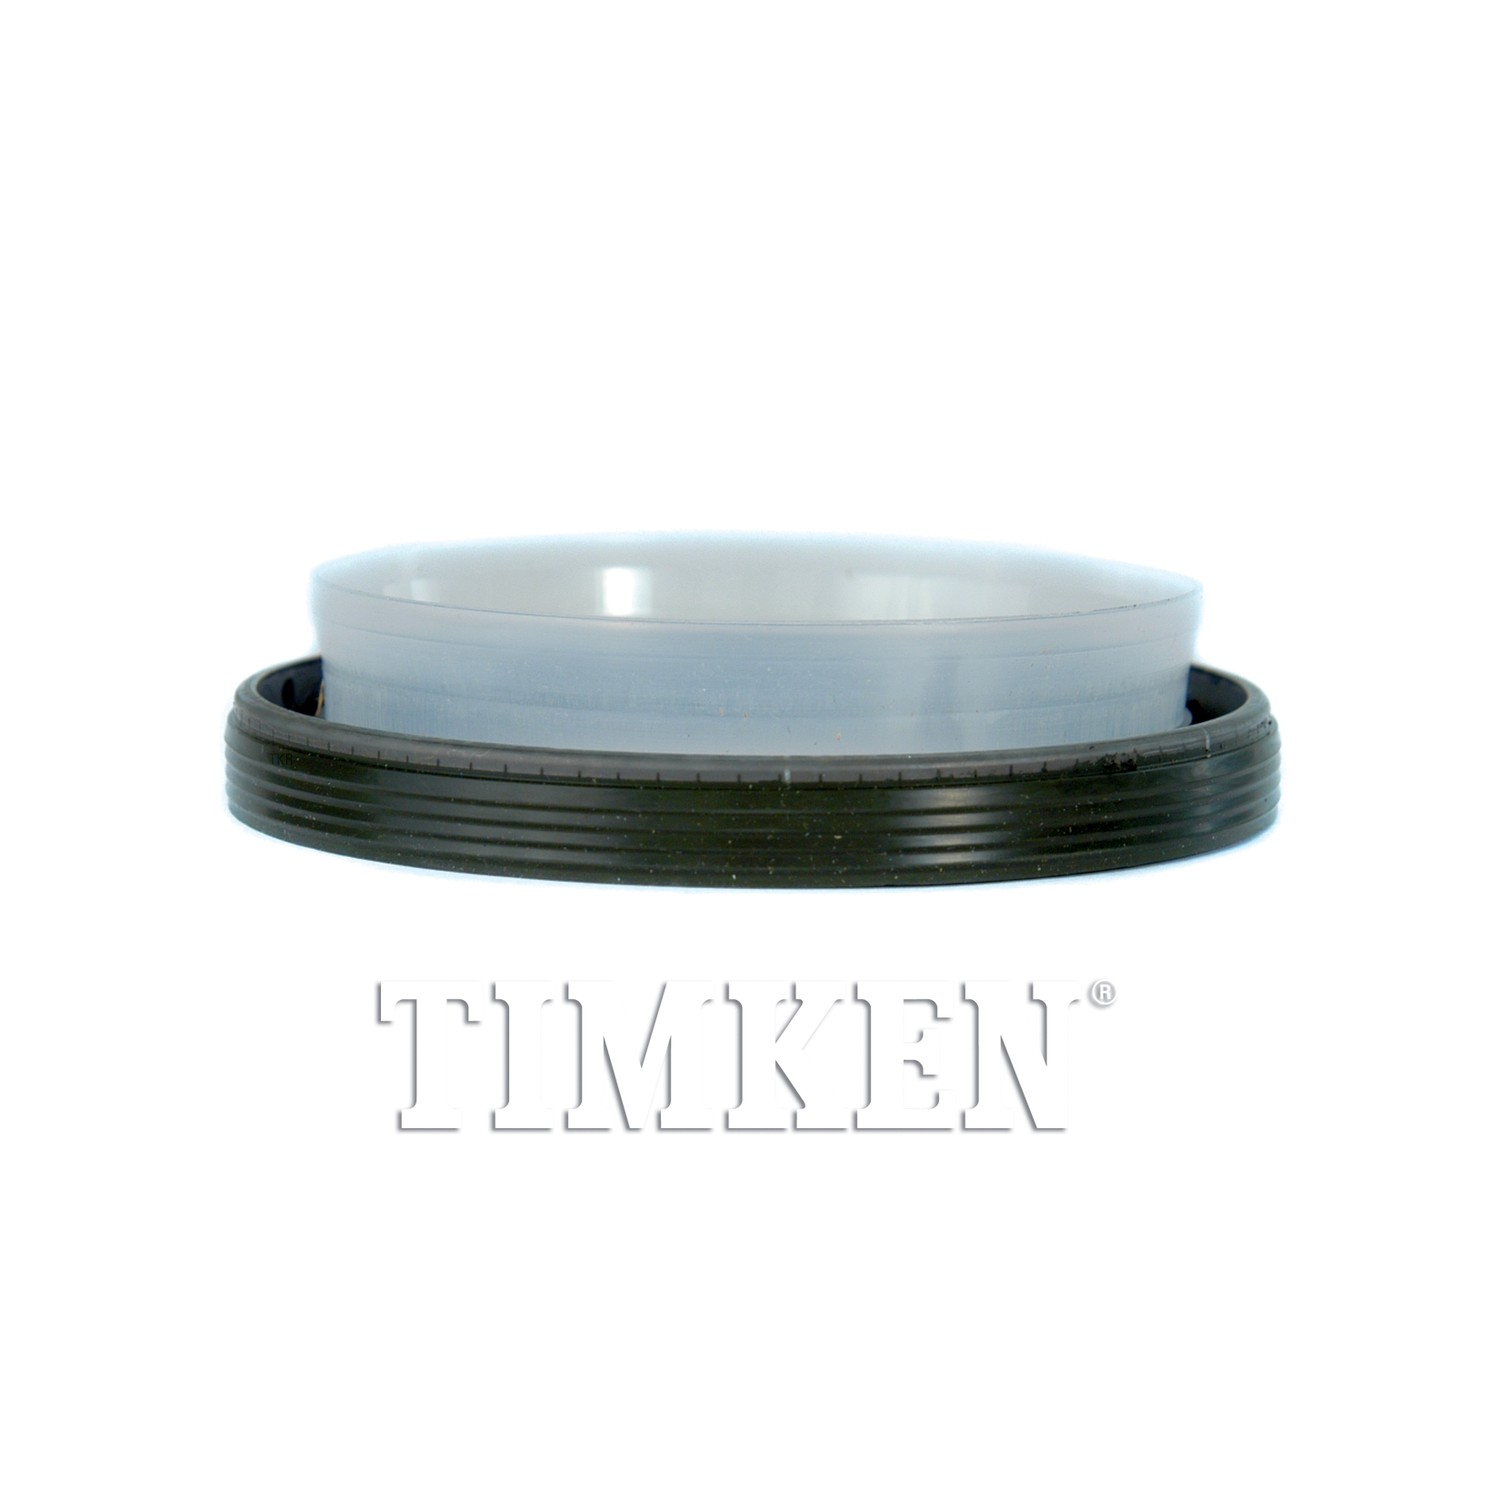 TIMKEN - Engine Crankshaft Seal - TIM 5274